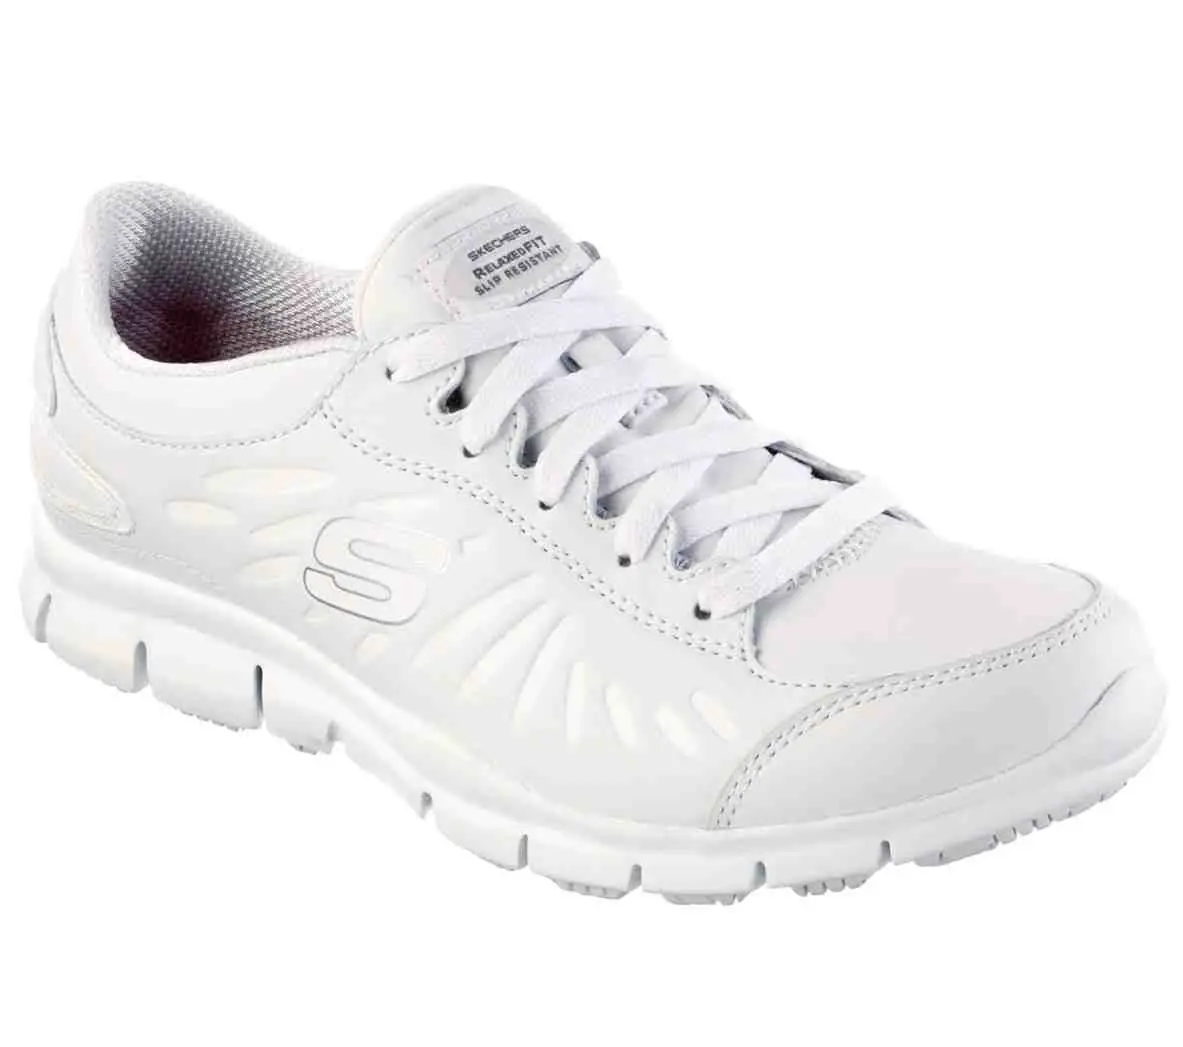 White Skechers Nursing Shoes